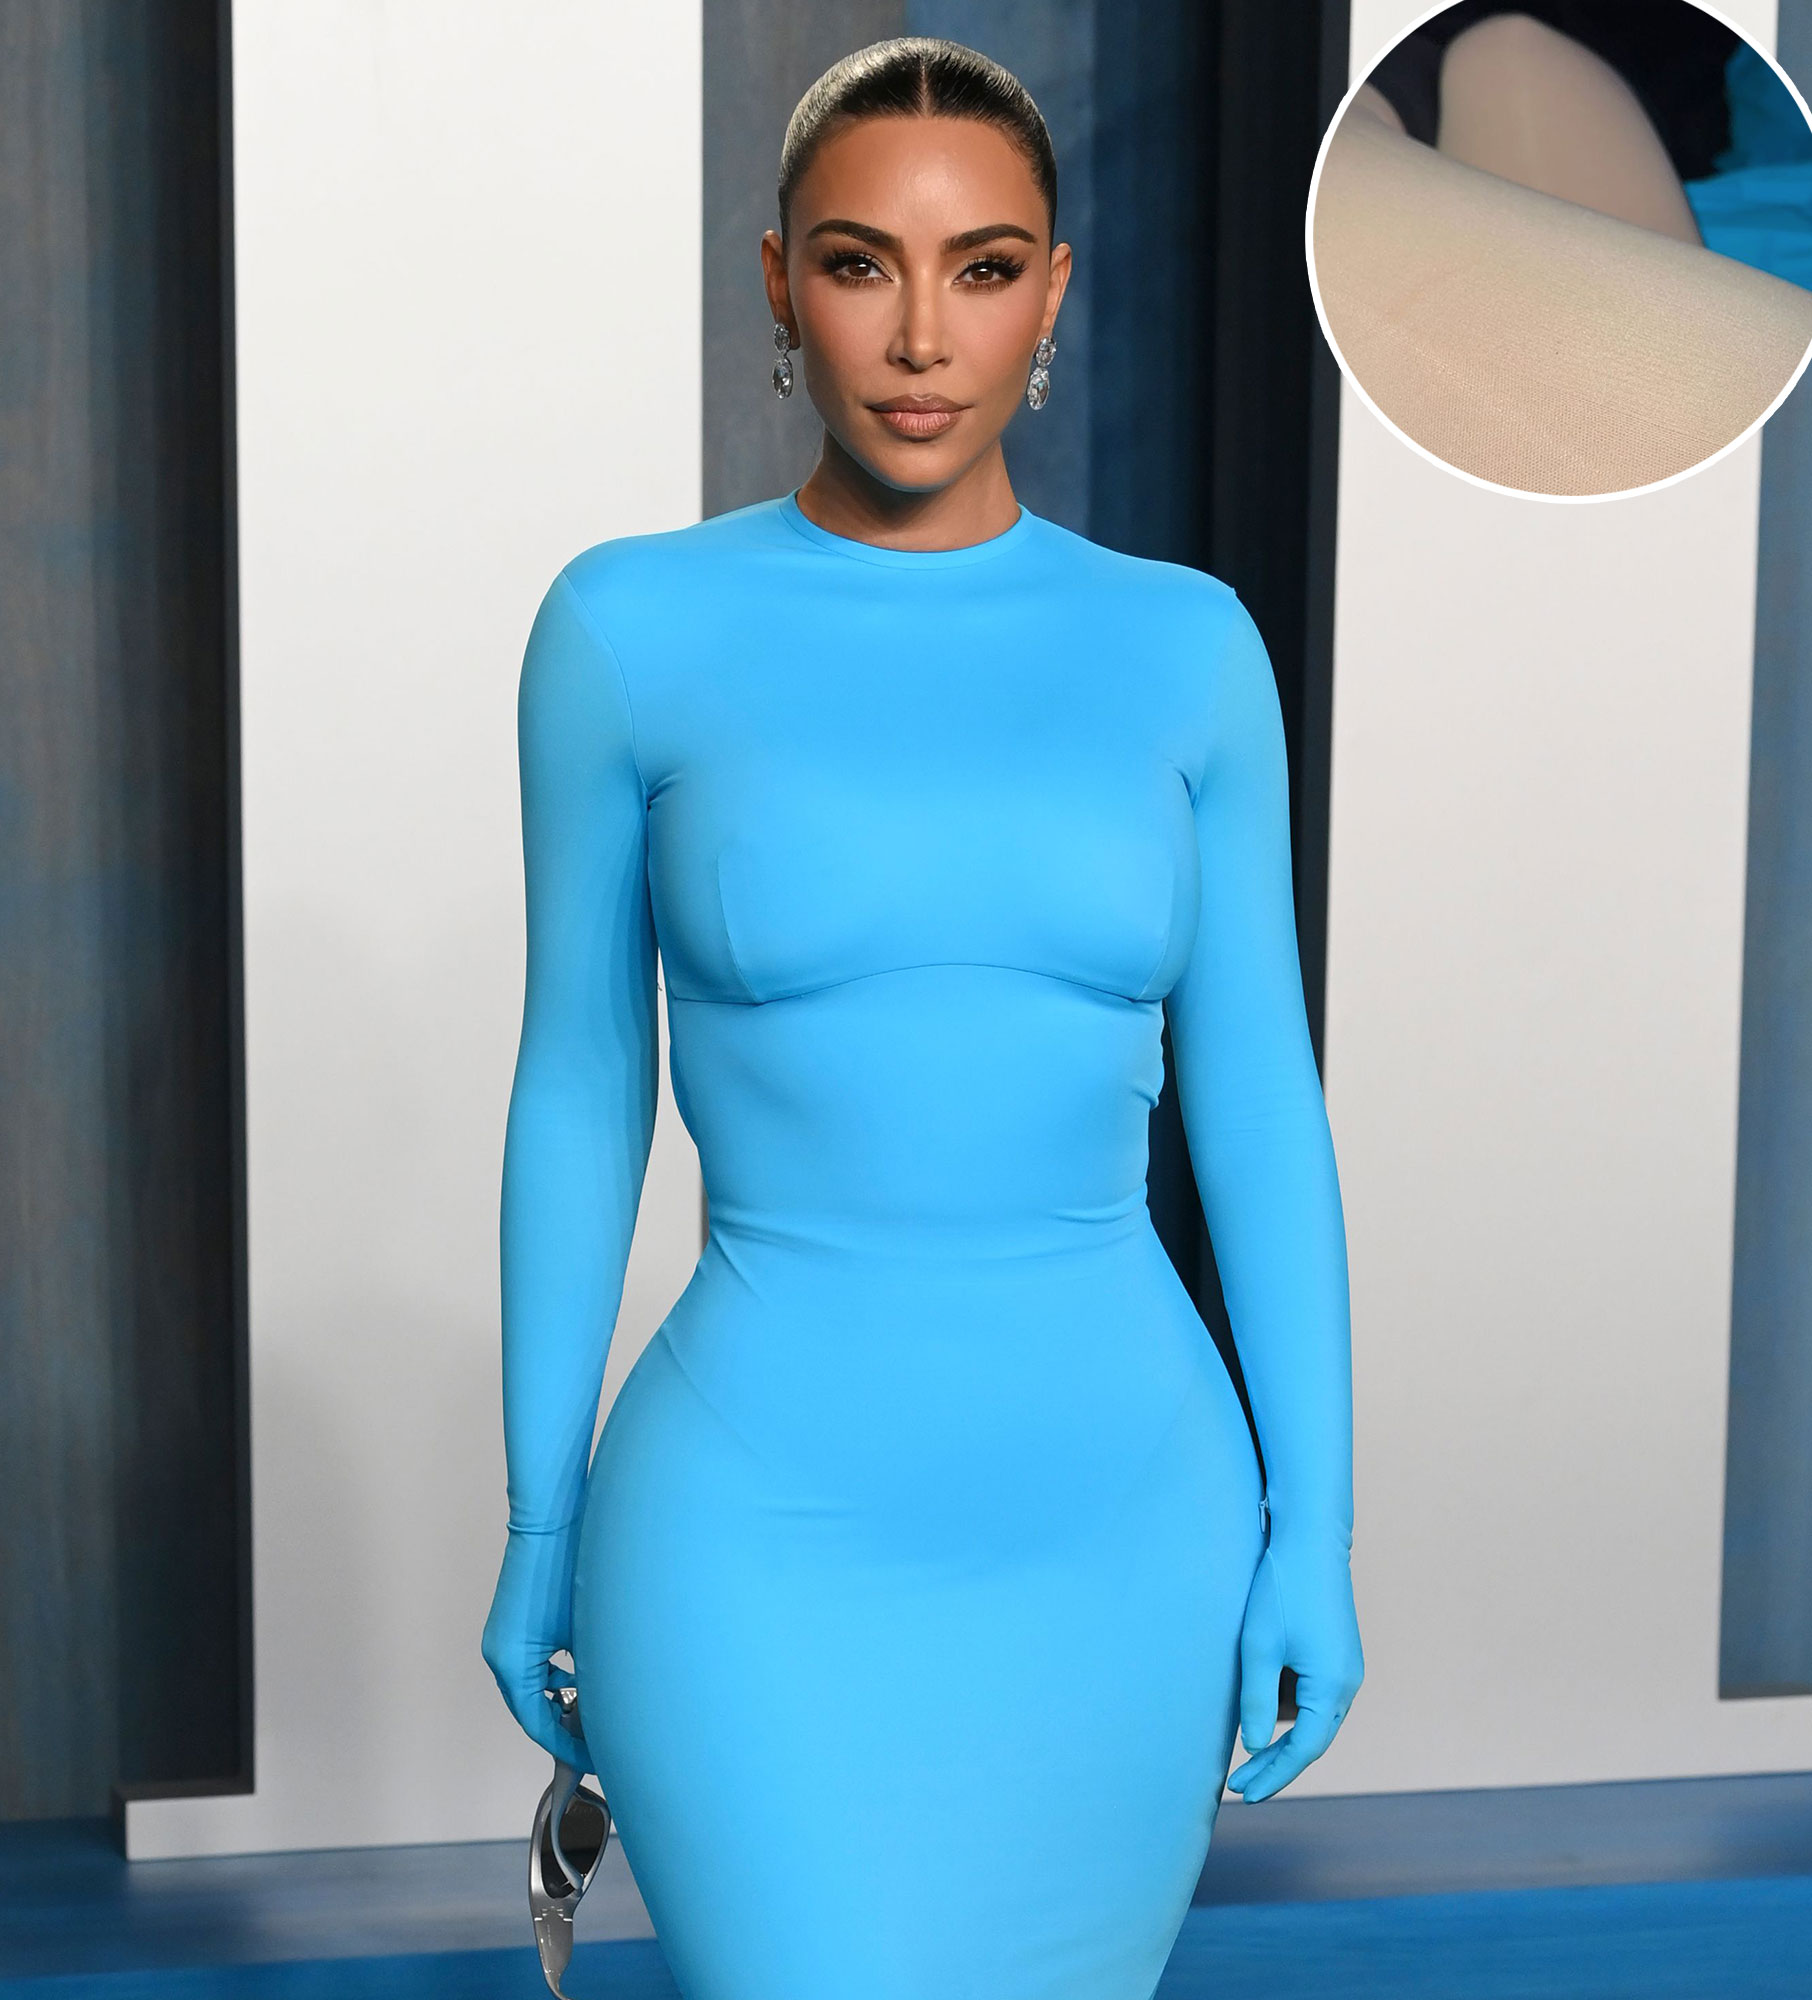 Kim Kardashian Spanx It Up In Super Tight, Sheer Dress